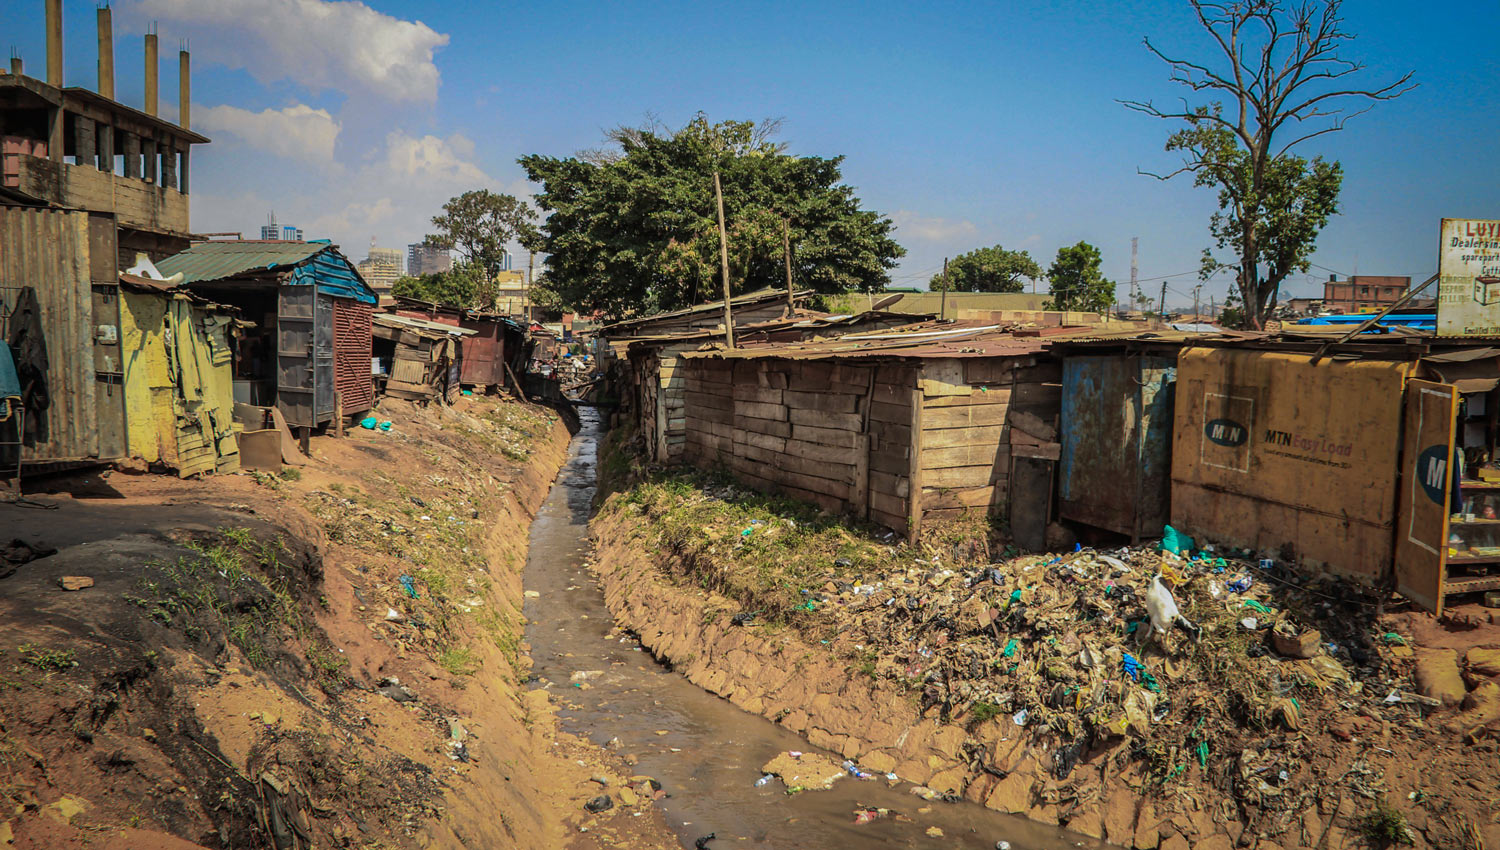 Stream with litter running between makeshift shacks in an African slum.